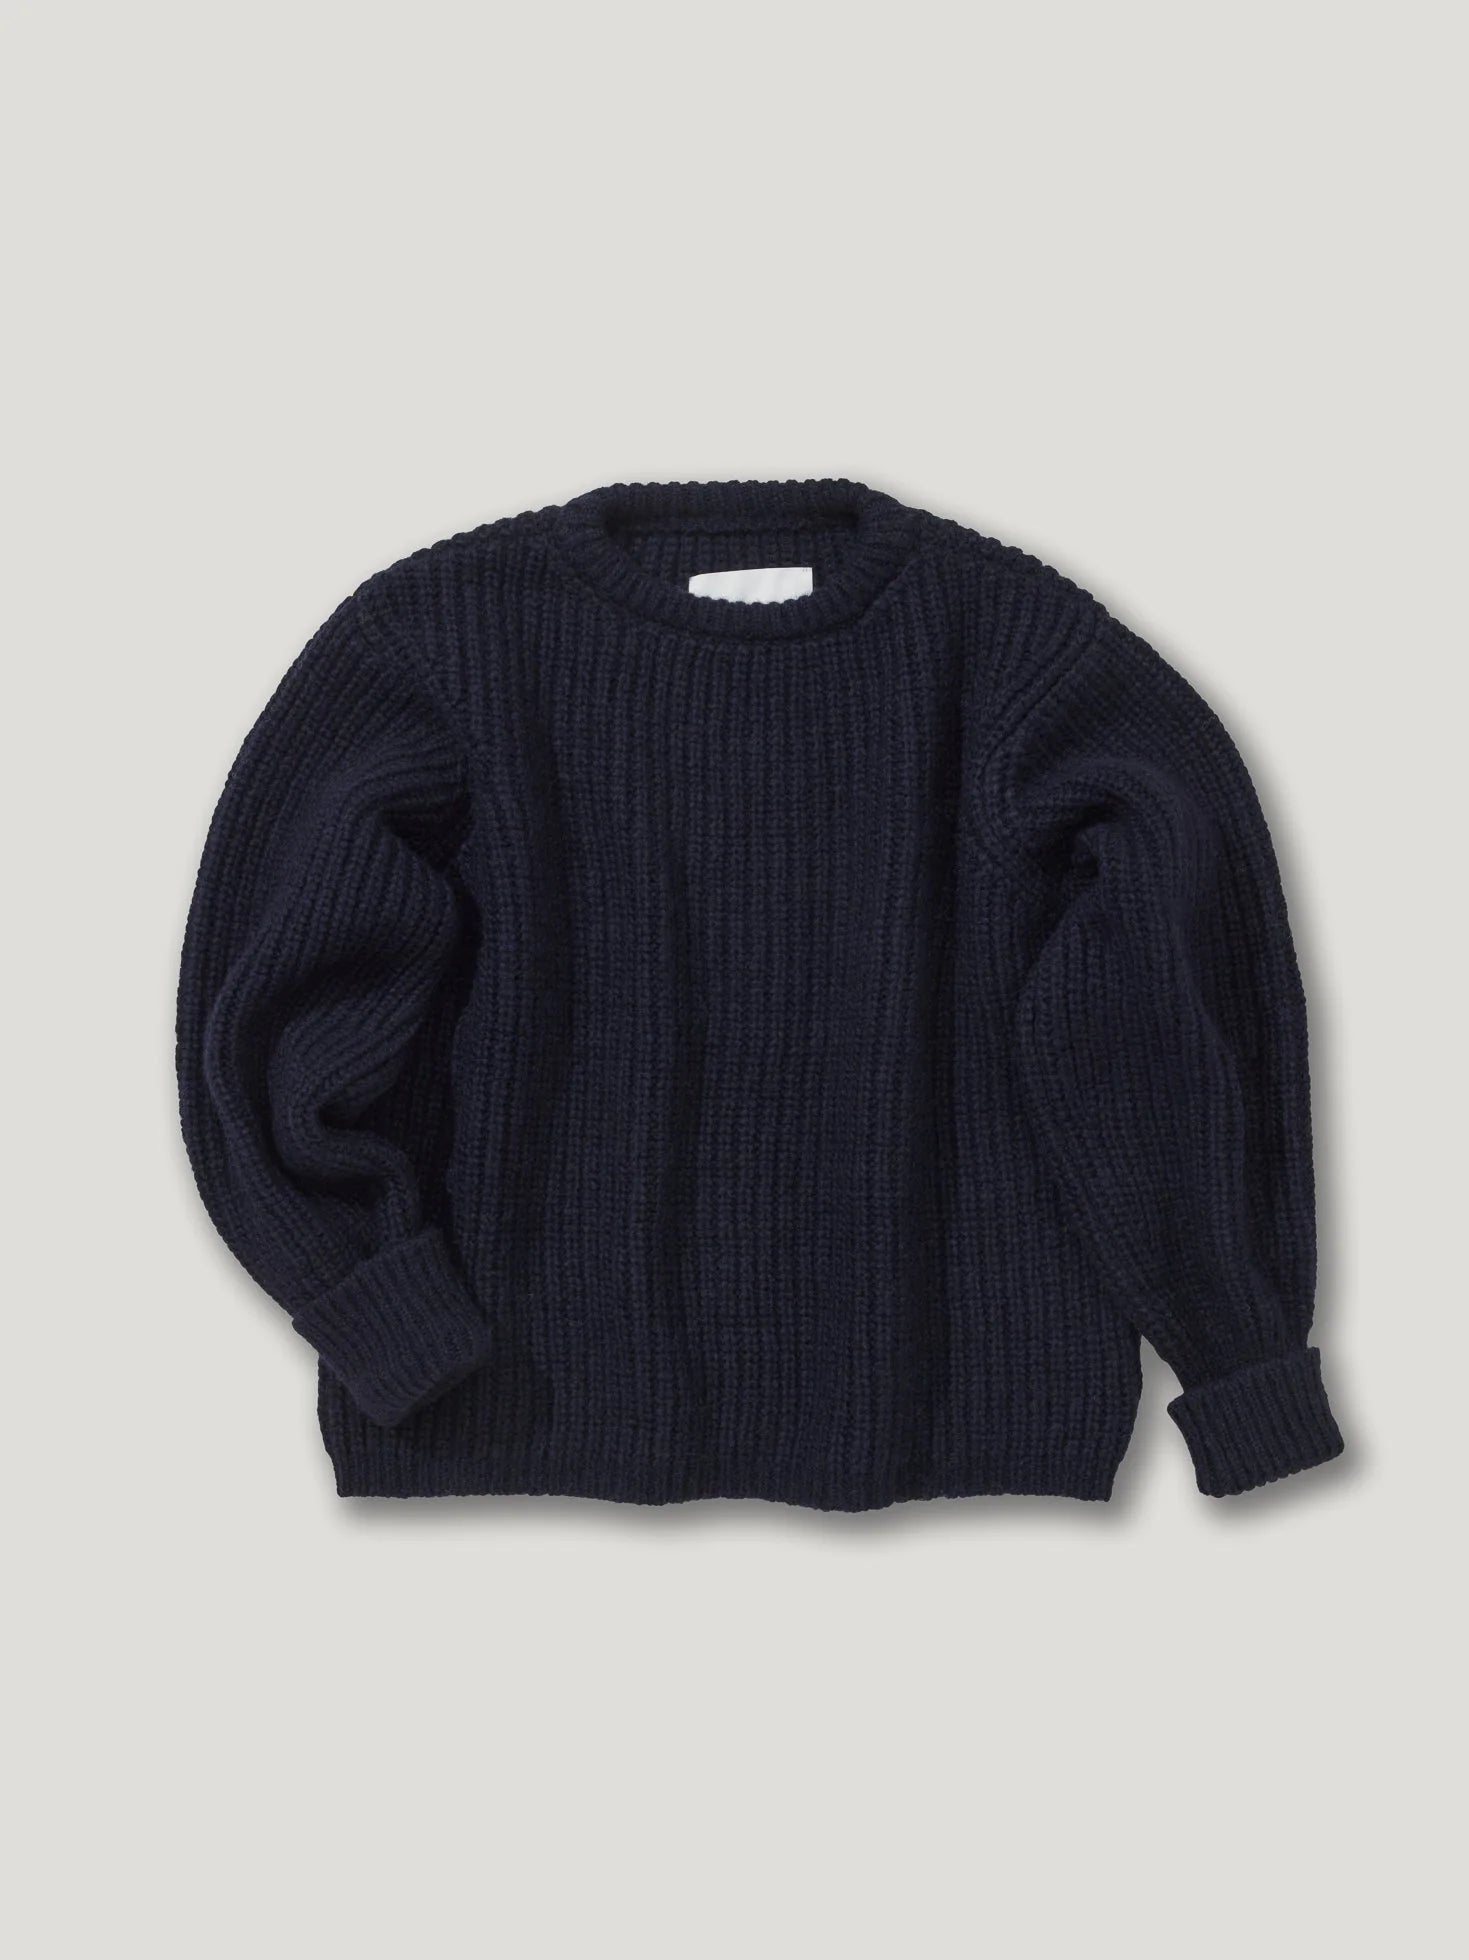 Ida knit sweater in navy